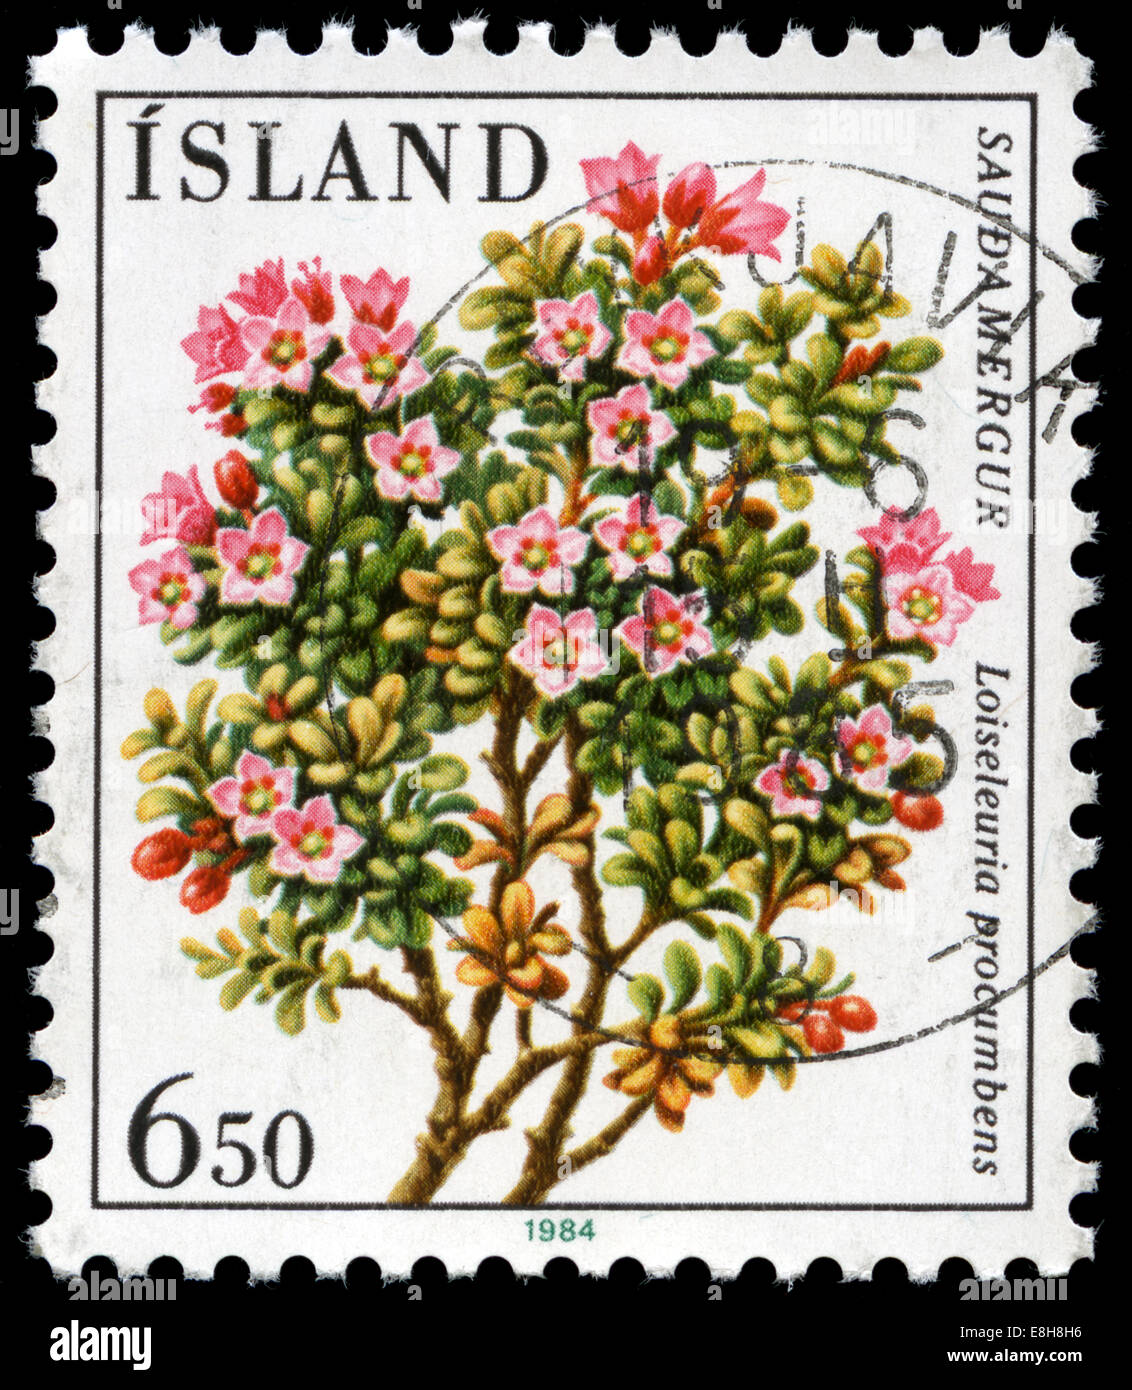 Iceland stamp depicting native plant loiseleuria procumbens (Alpine azalea) Stock Photo